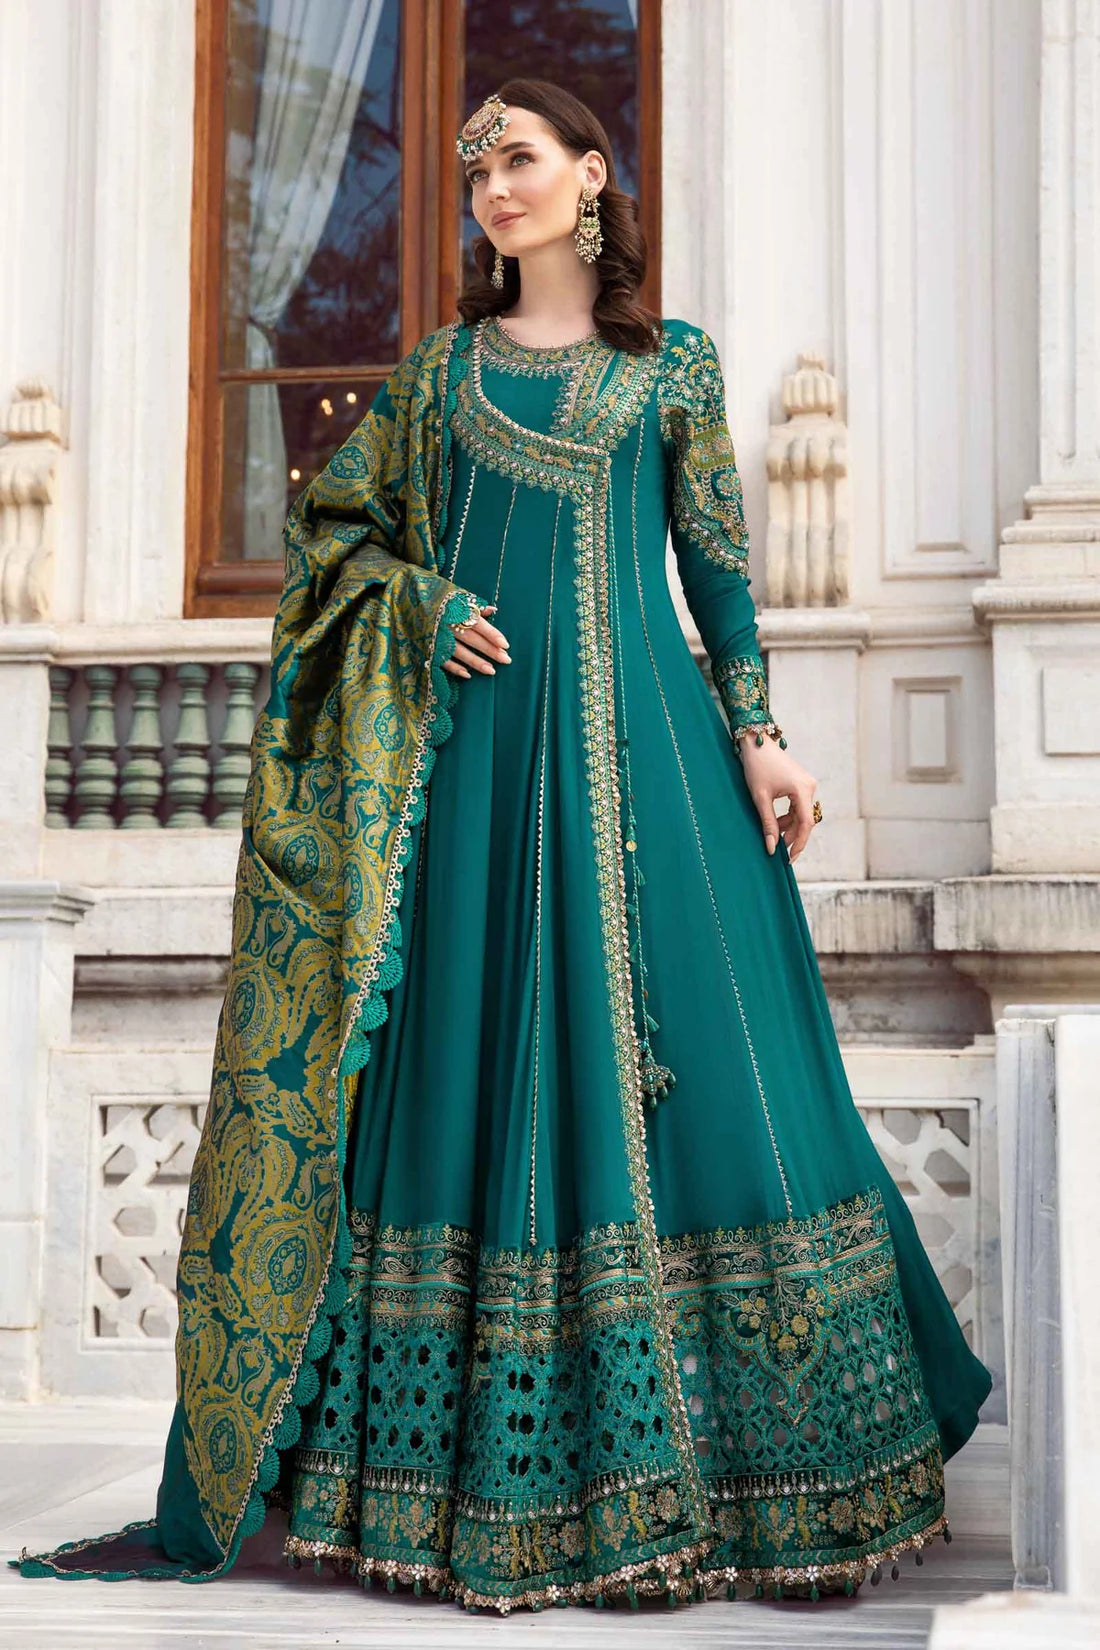 Maria B | Linen 23 | Emerald Green DL-1107 - Khanumjan  Pakistani Clothes and Designer Dresses in UK, USA 